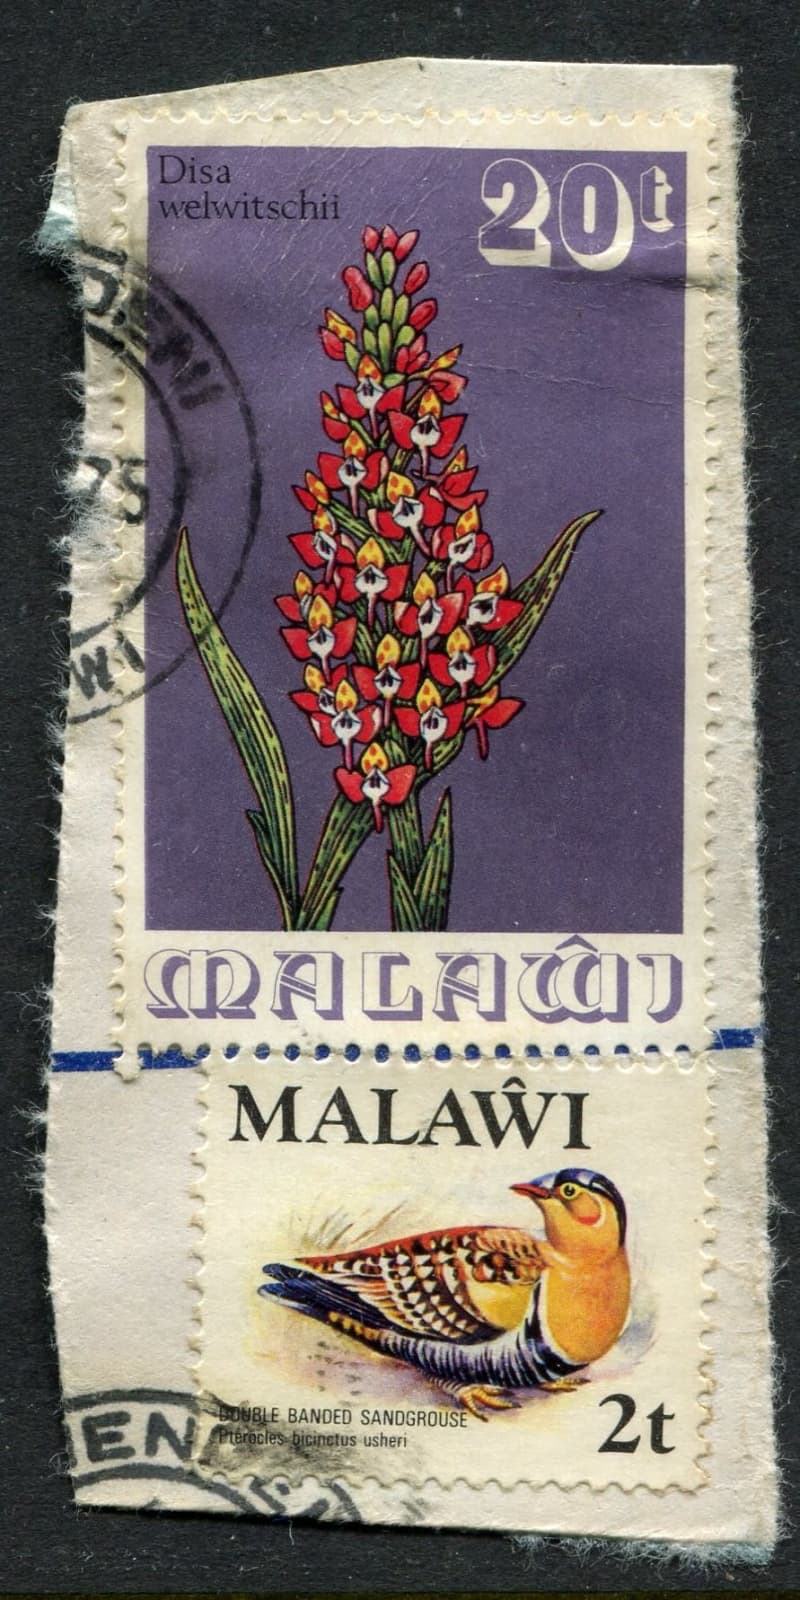 Malawi - Used on Piece